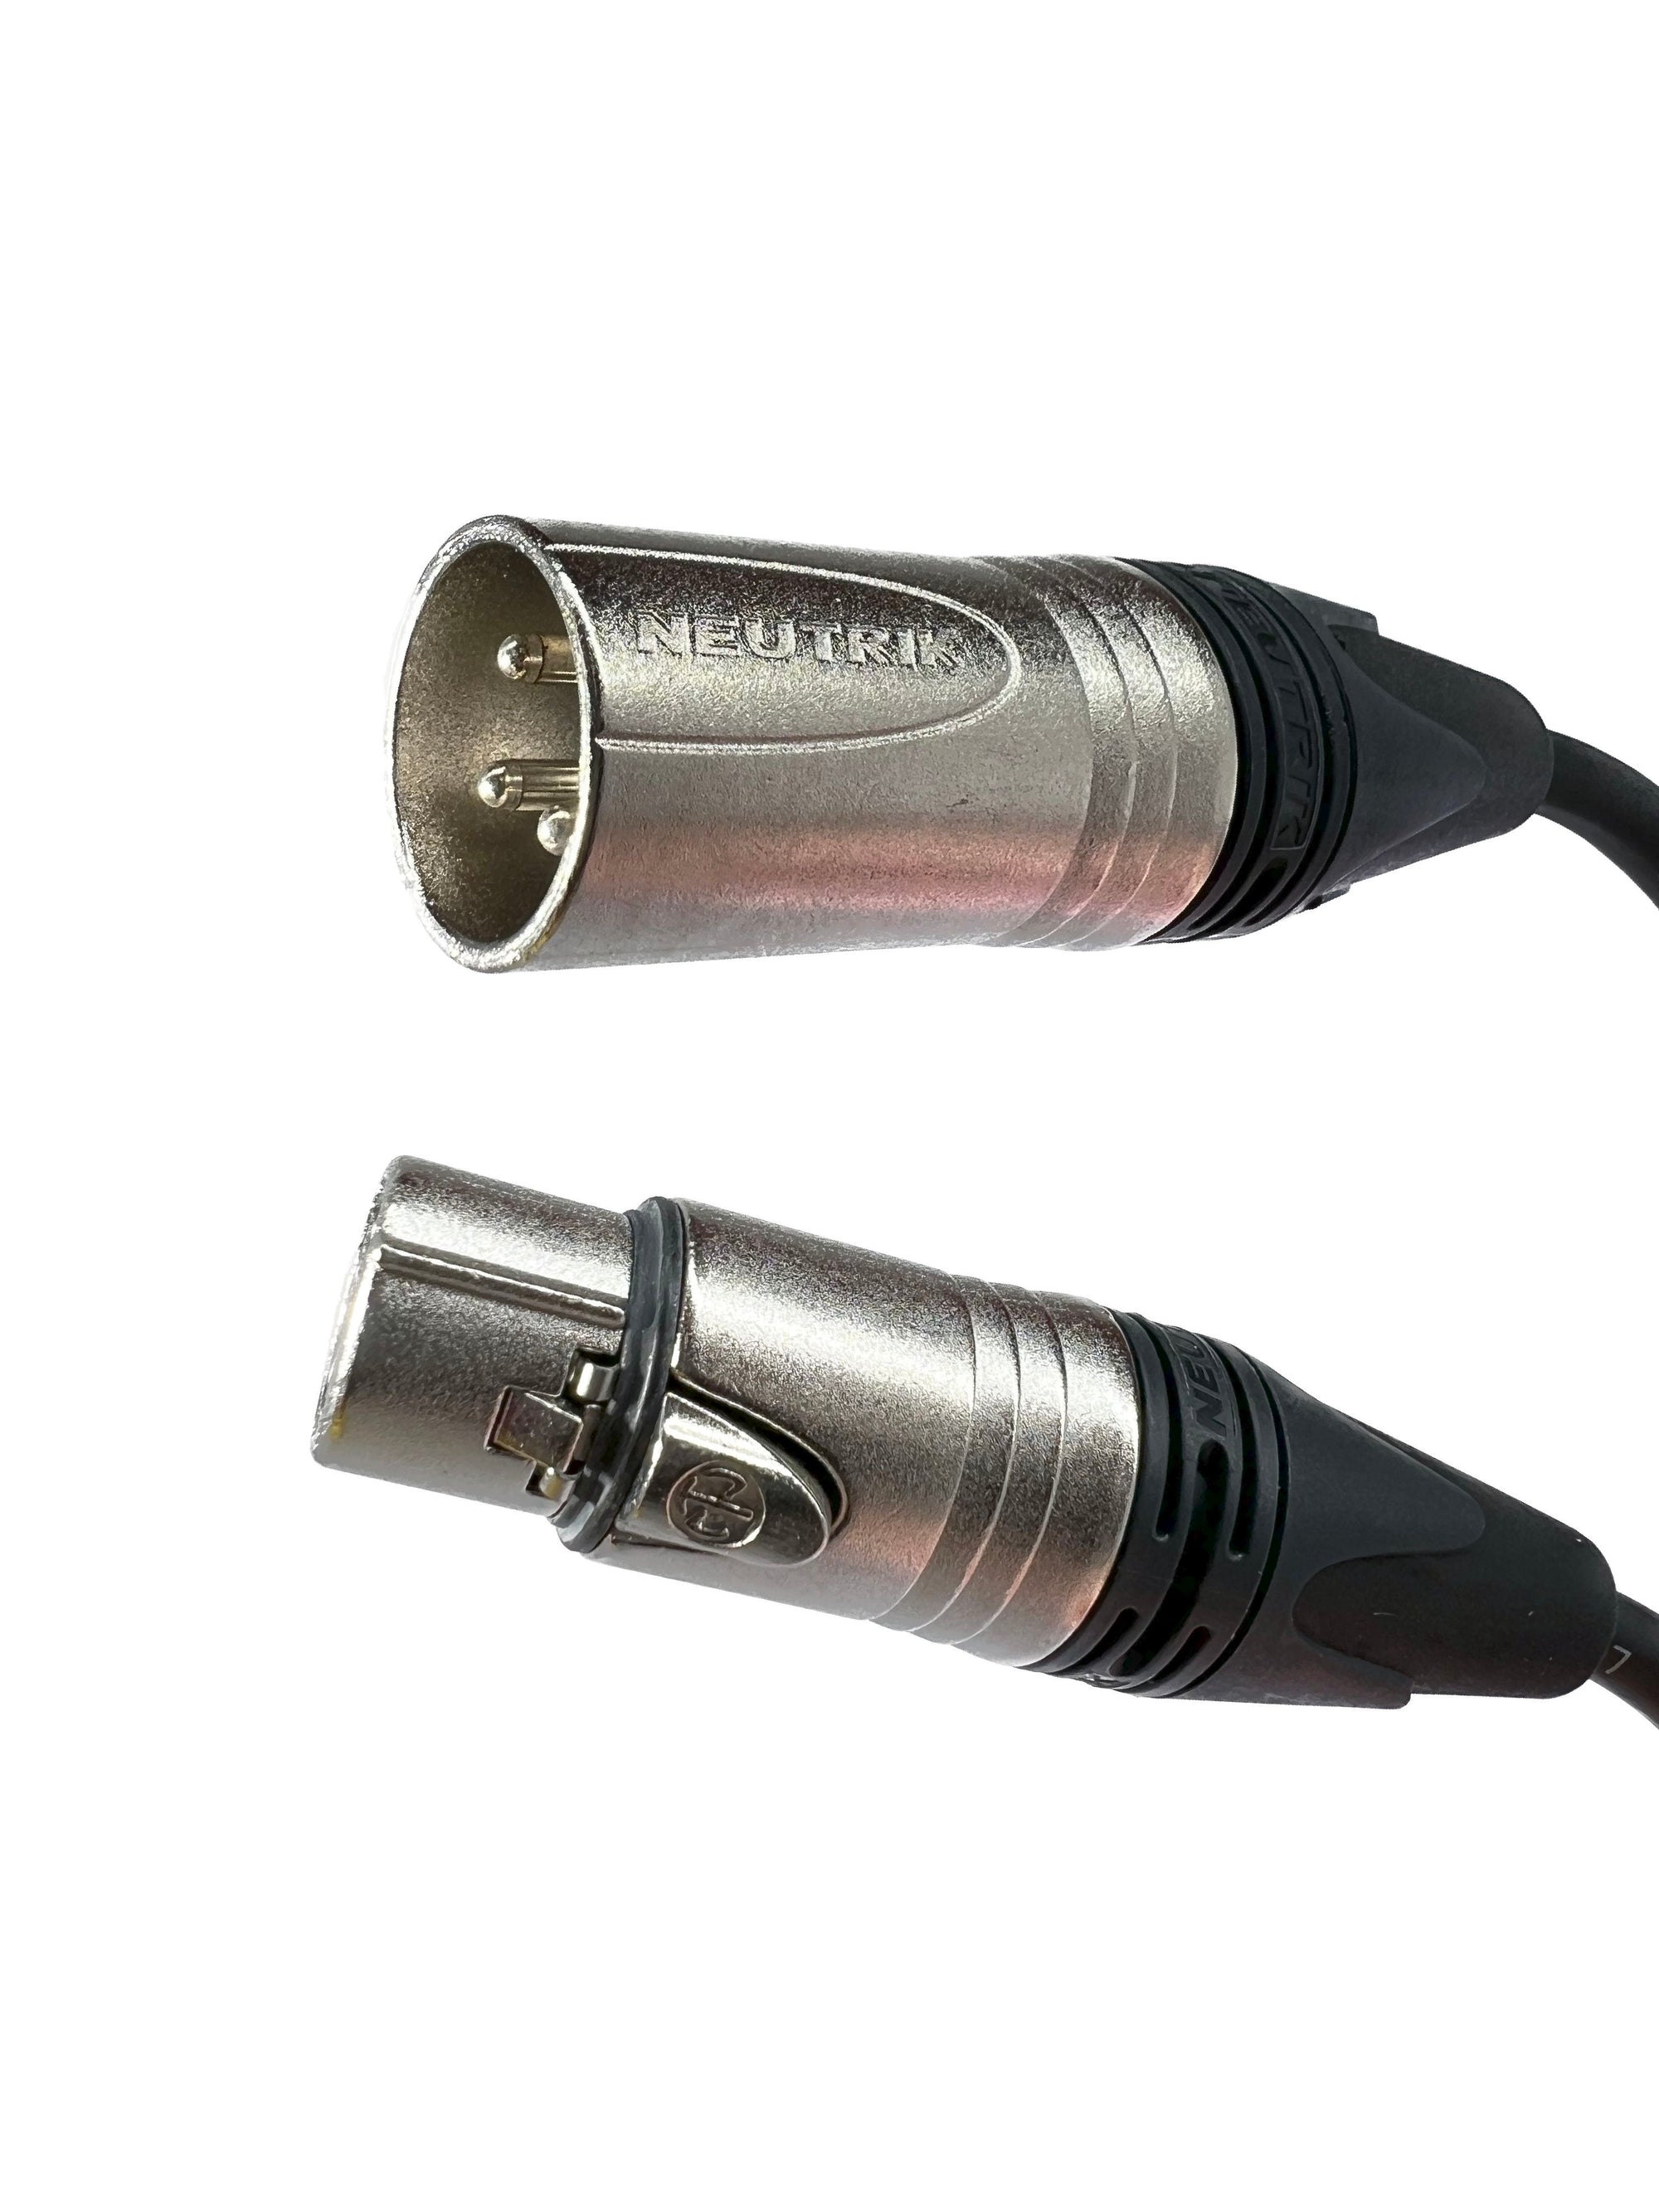 Balanced XLR Audio Cables with Male to Female Neutrik Connectors